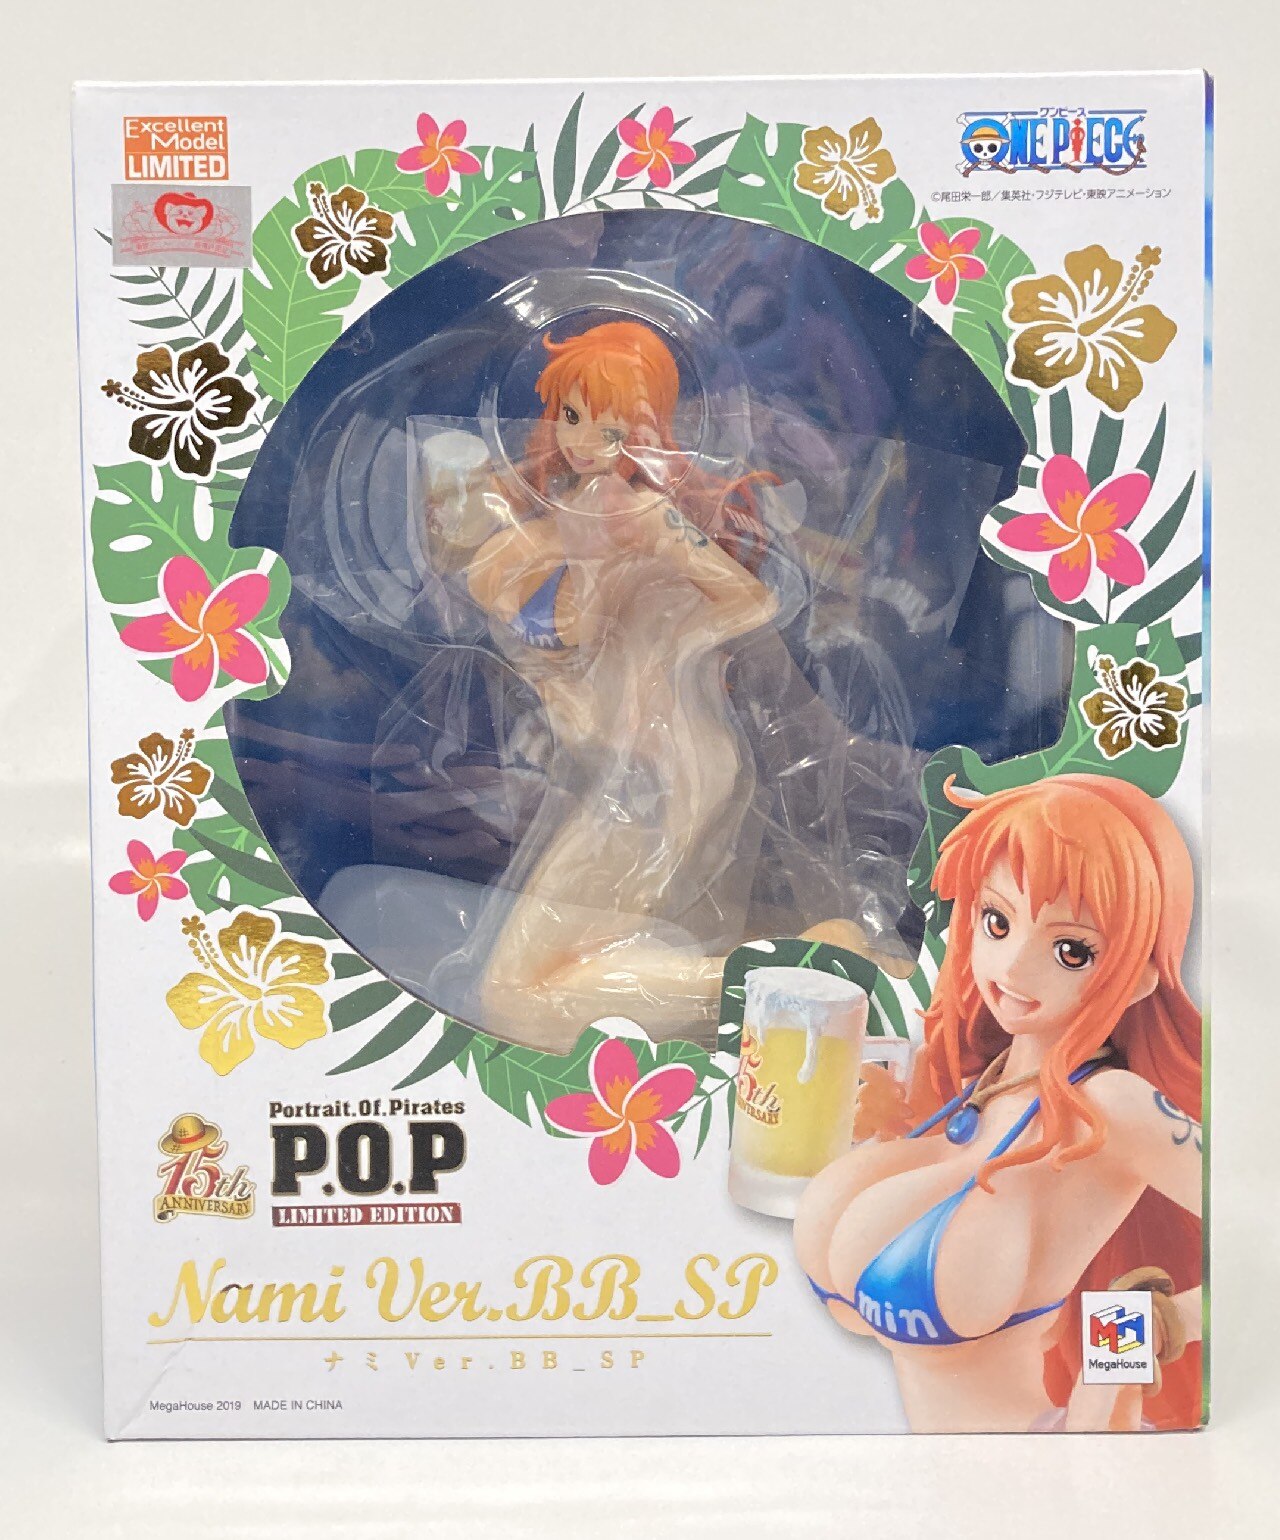 ワンピース POP ナミ Ver.BB SP - 通販 - csa.sakura.ne.jp